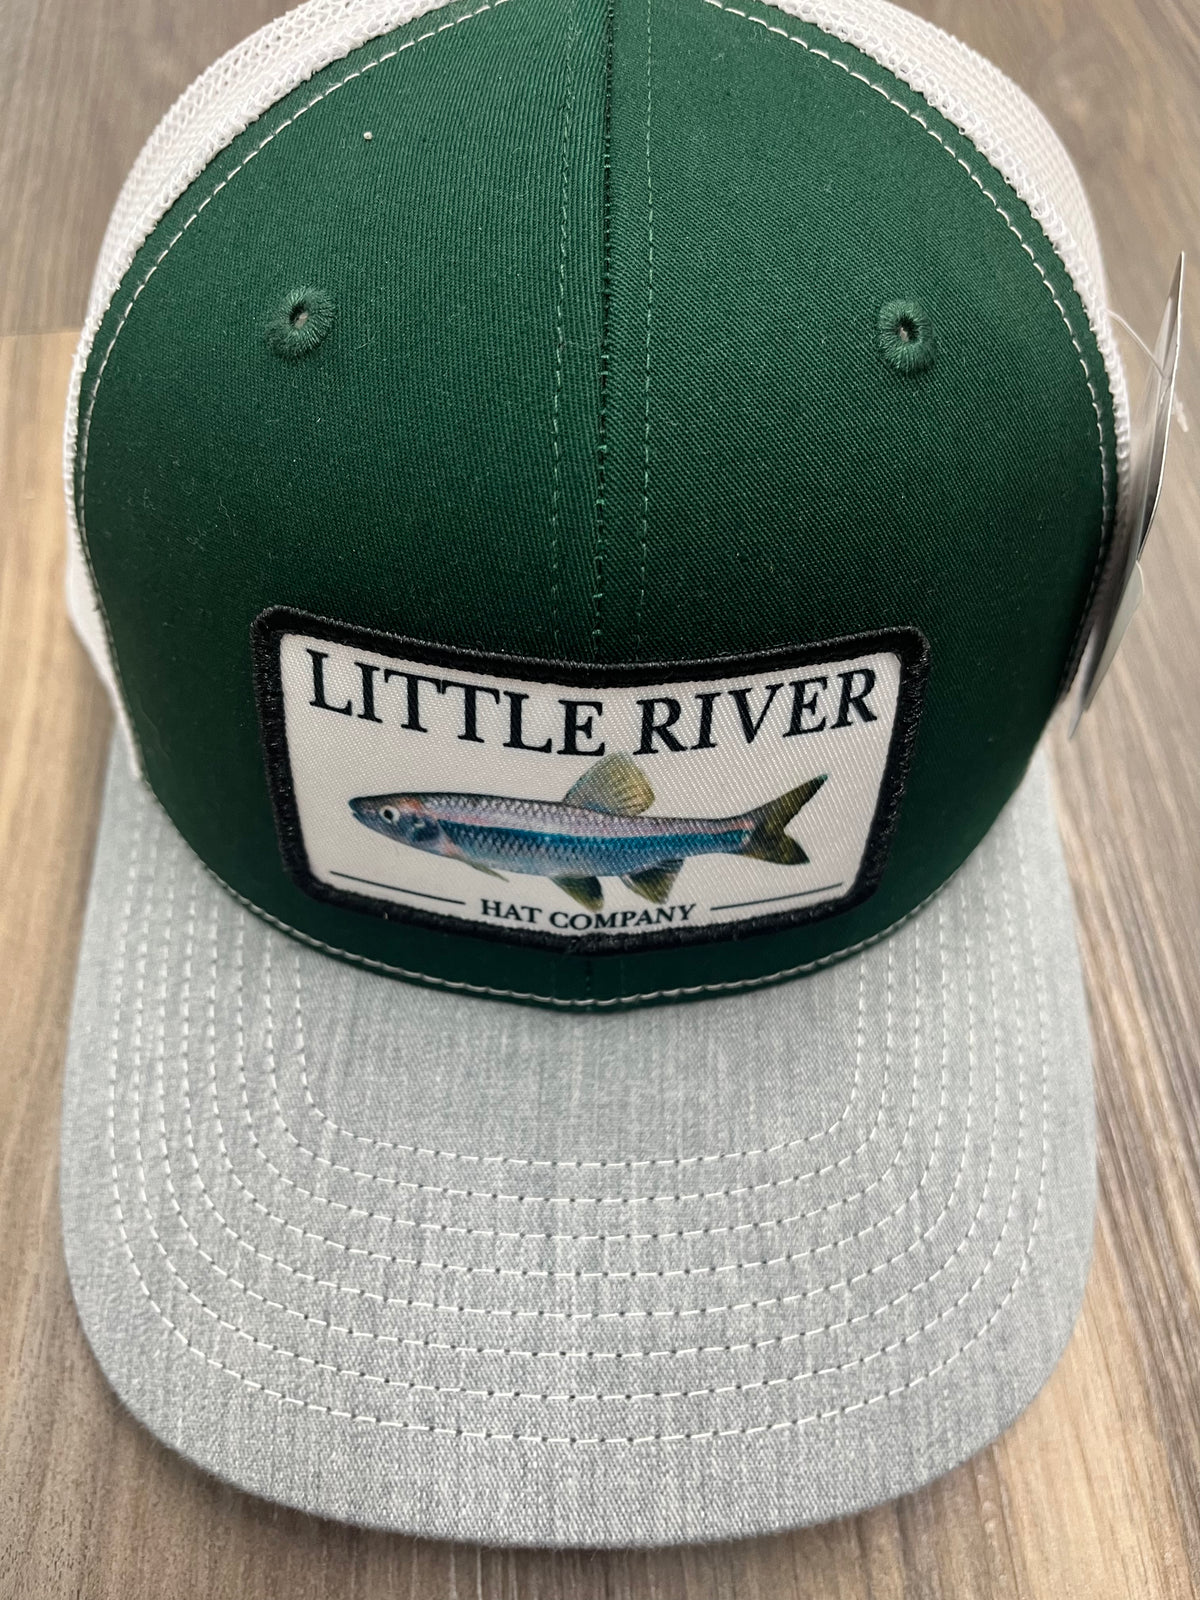 Little River Fish Badge Hat